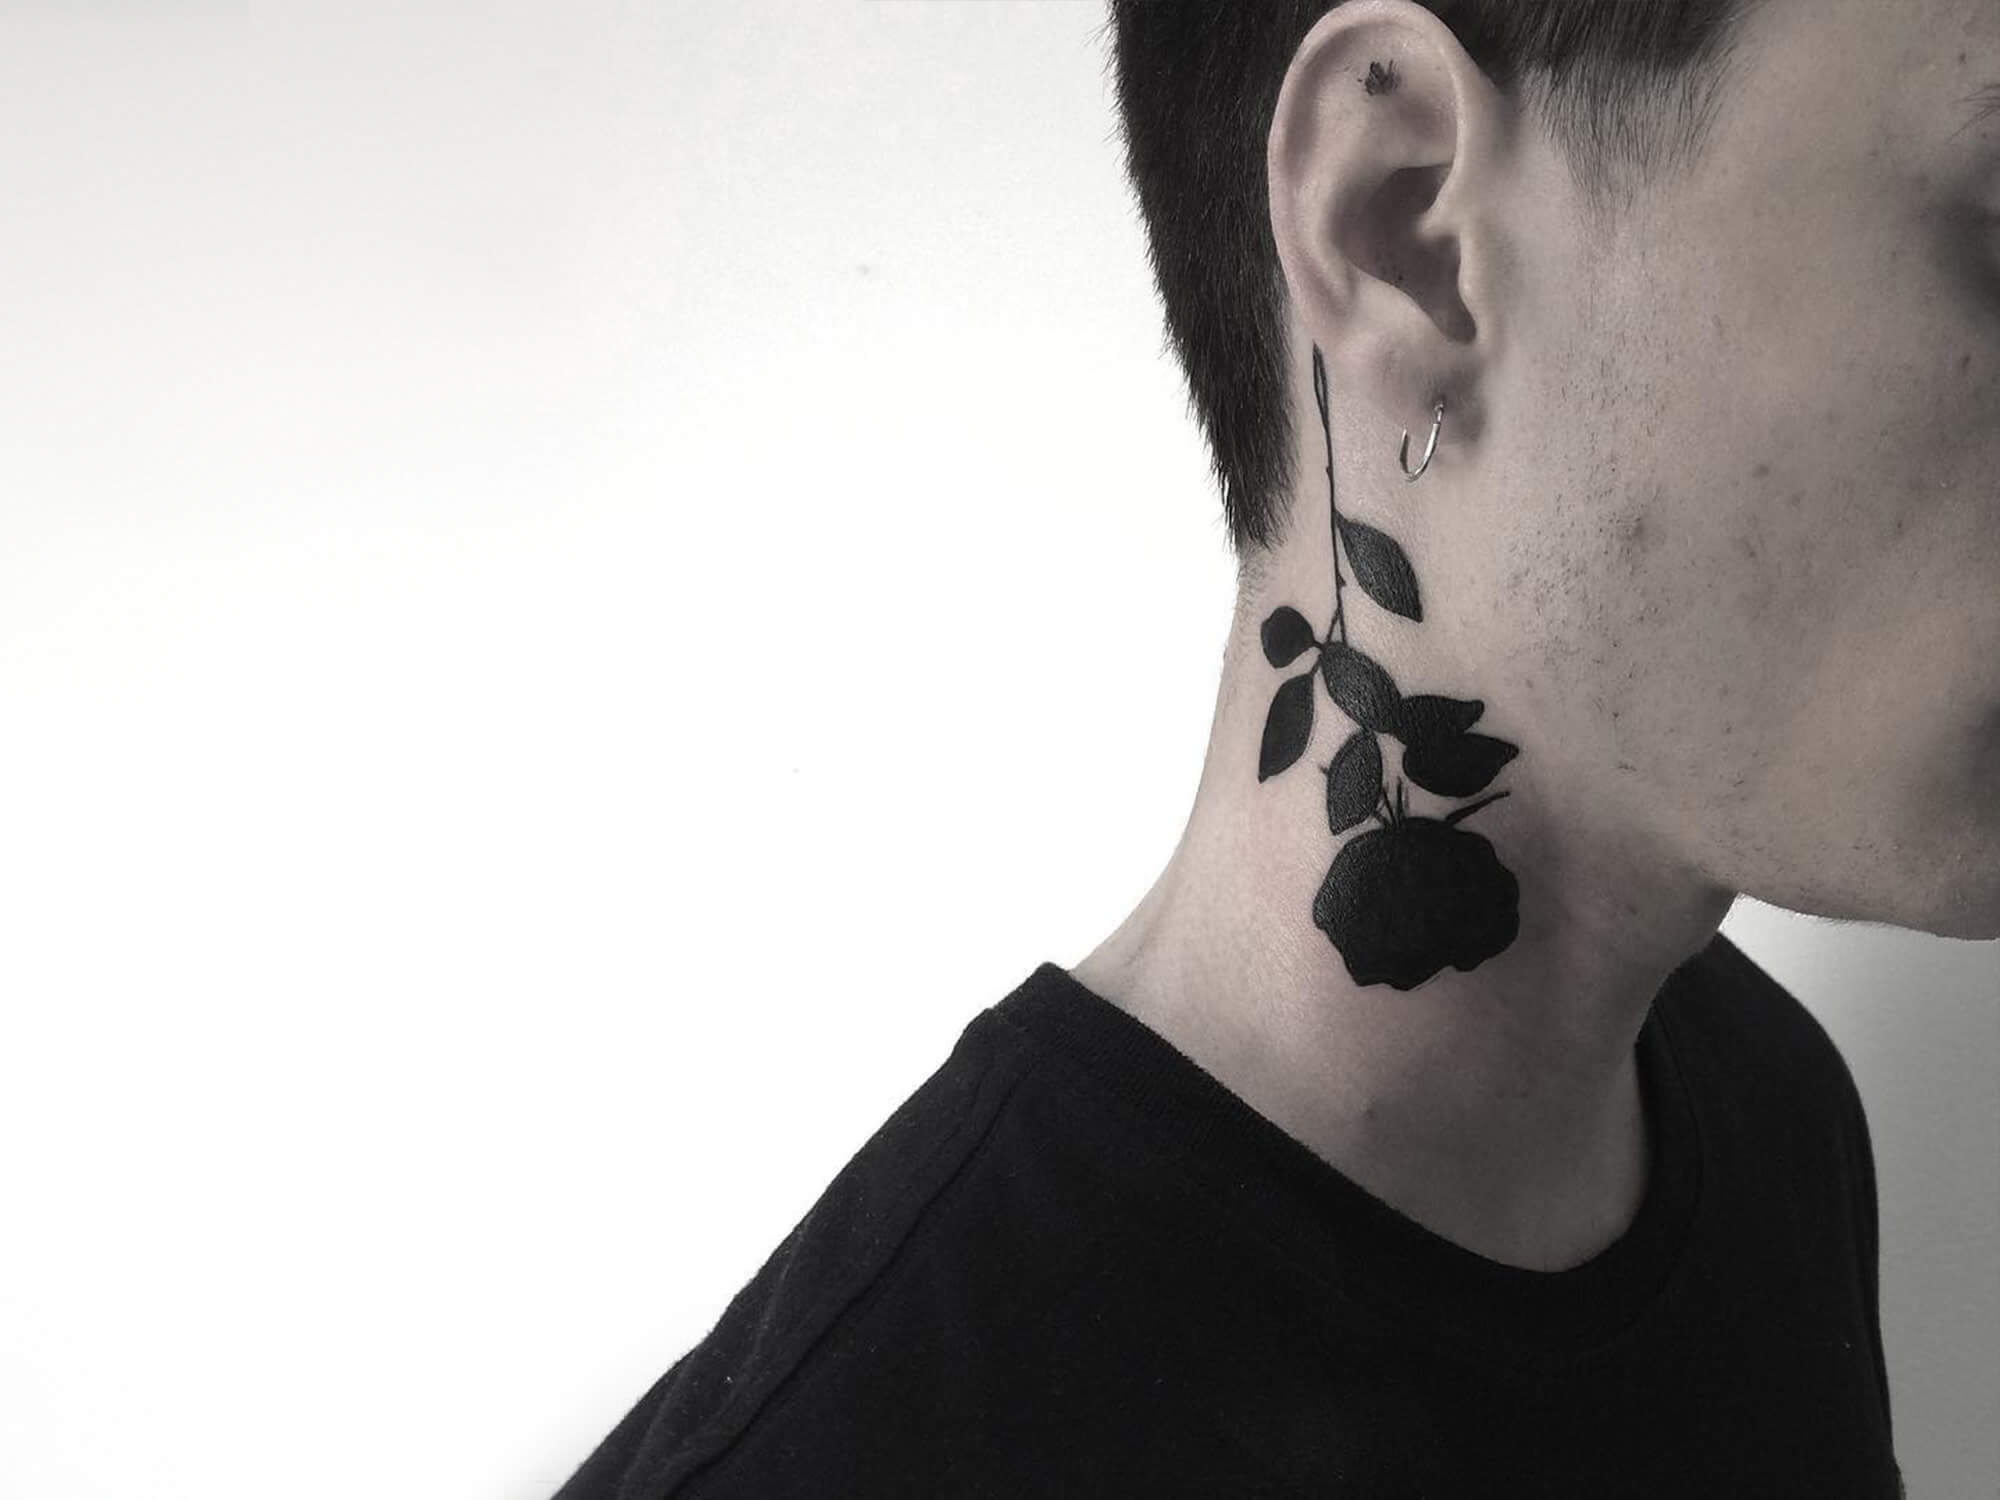 Dark Rose Tattoo